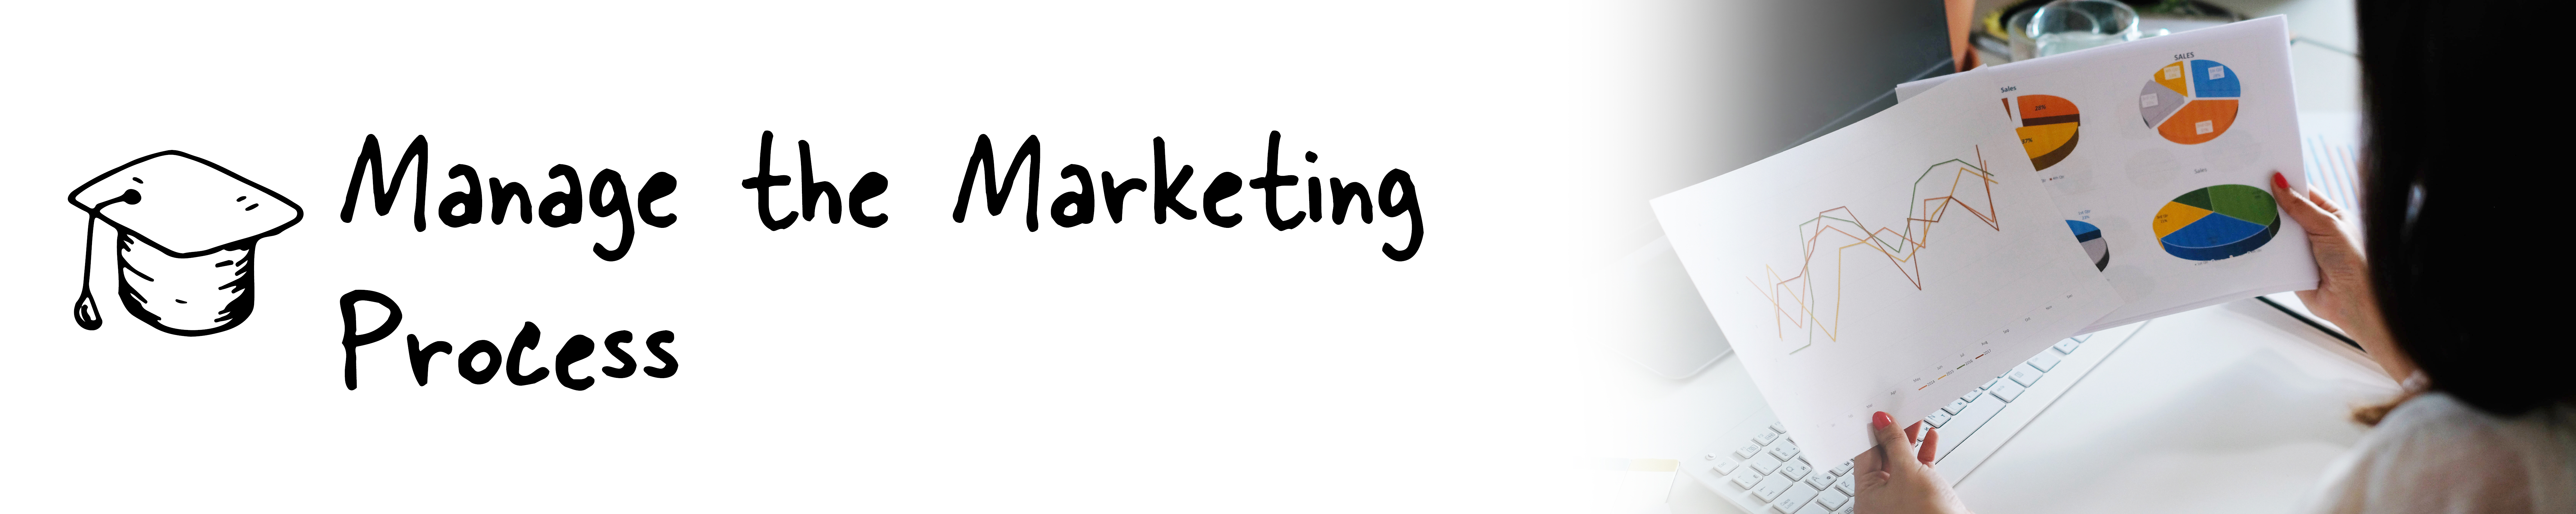 Manage the Marketing Process